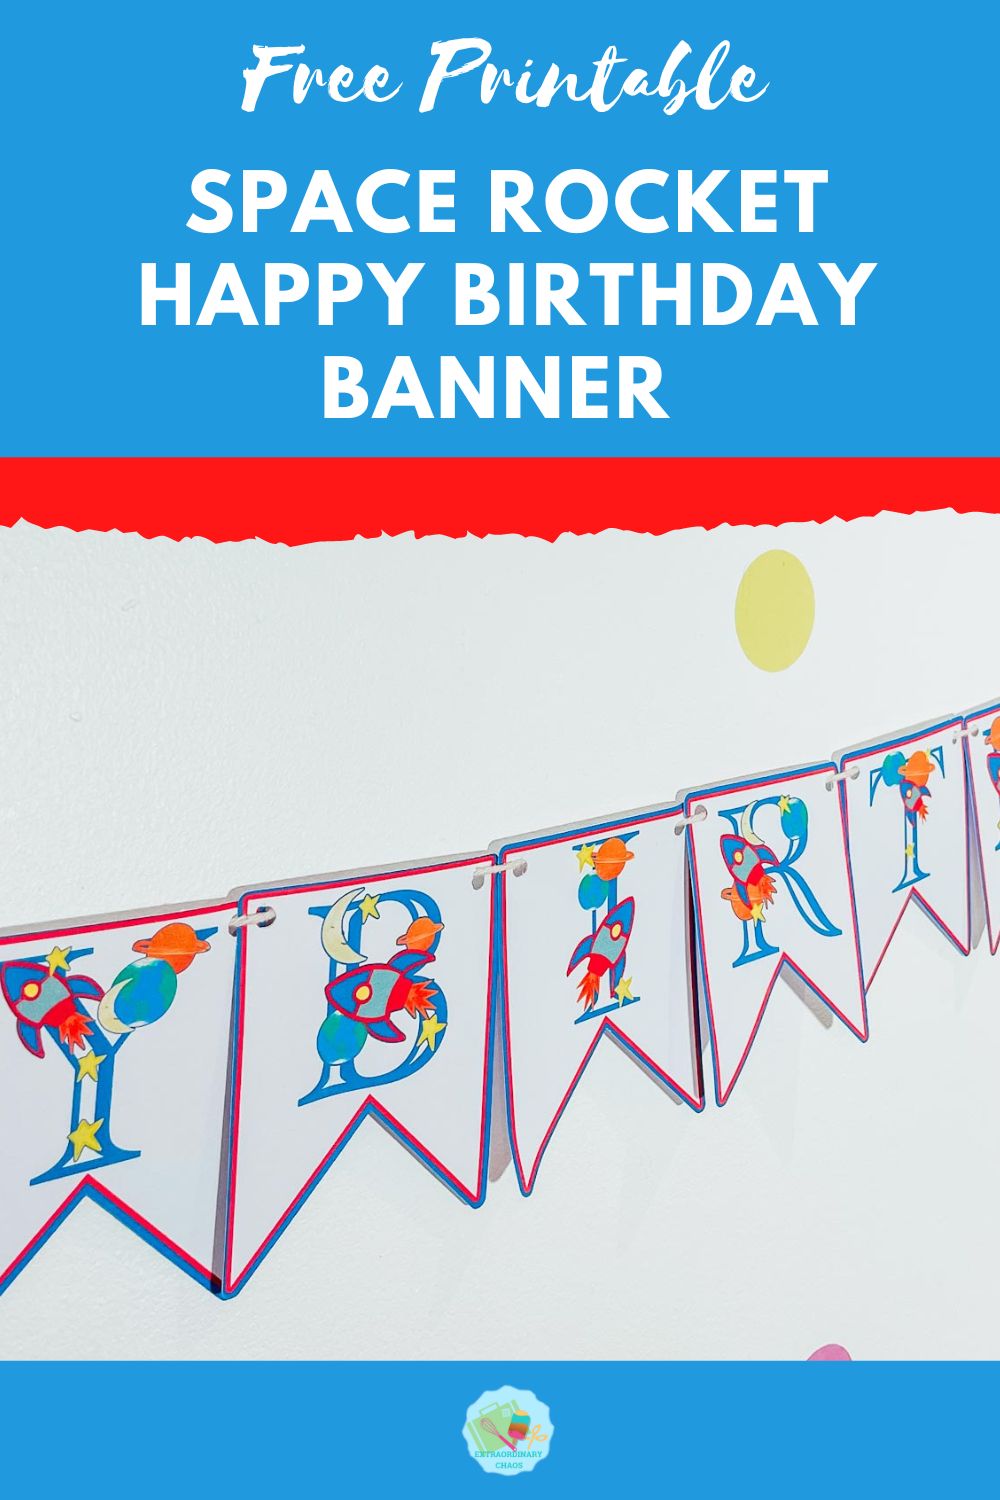 Free printable Happy Birthday Space Rocket Banner